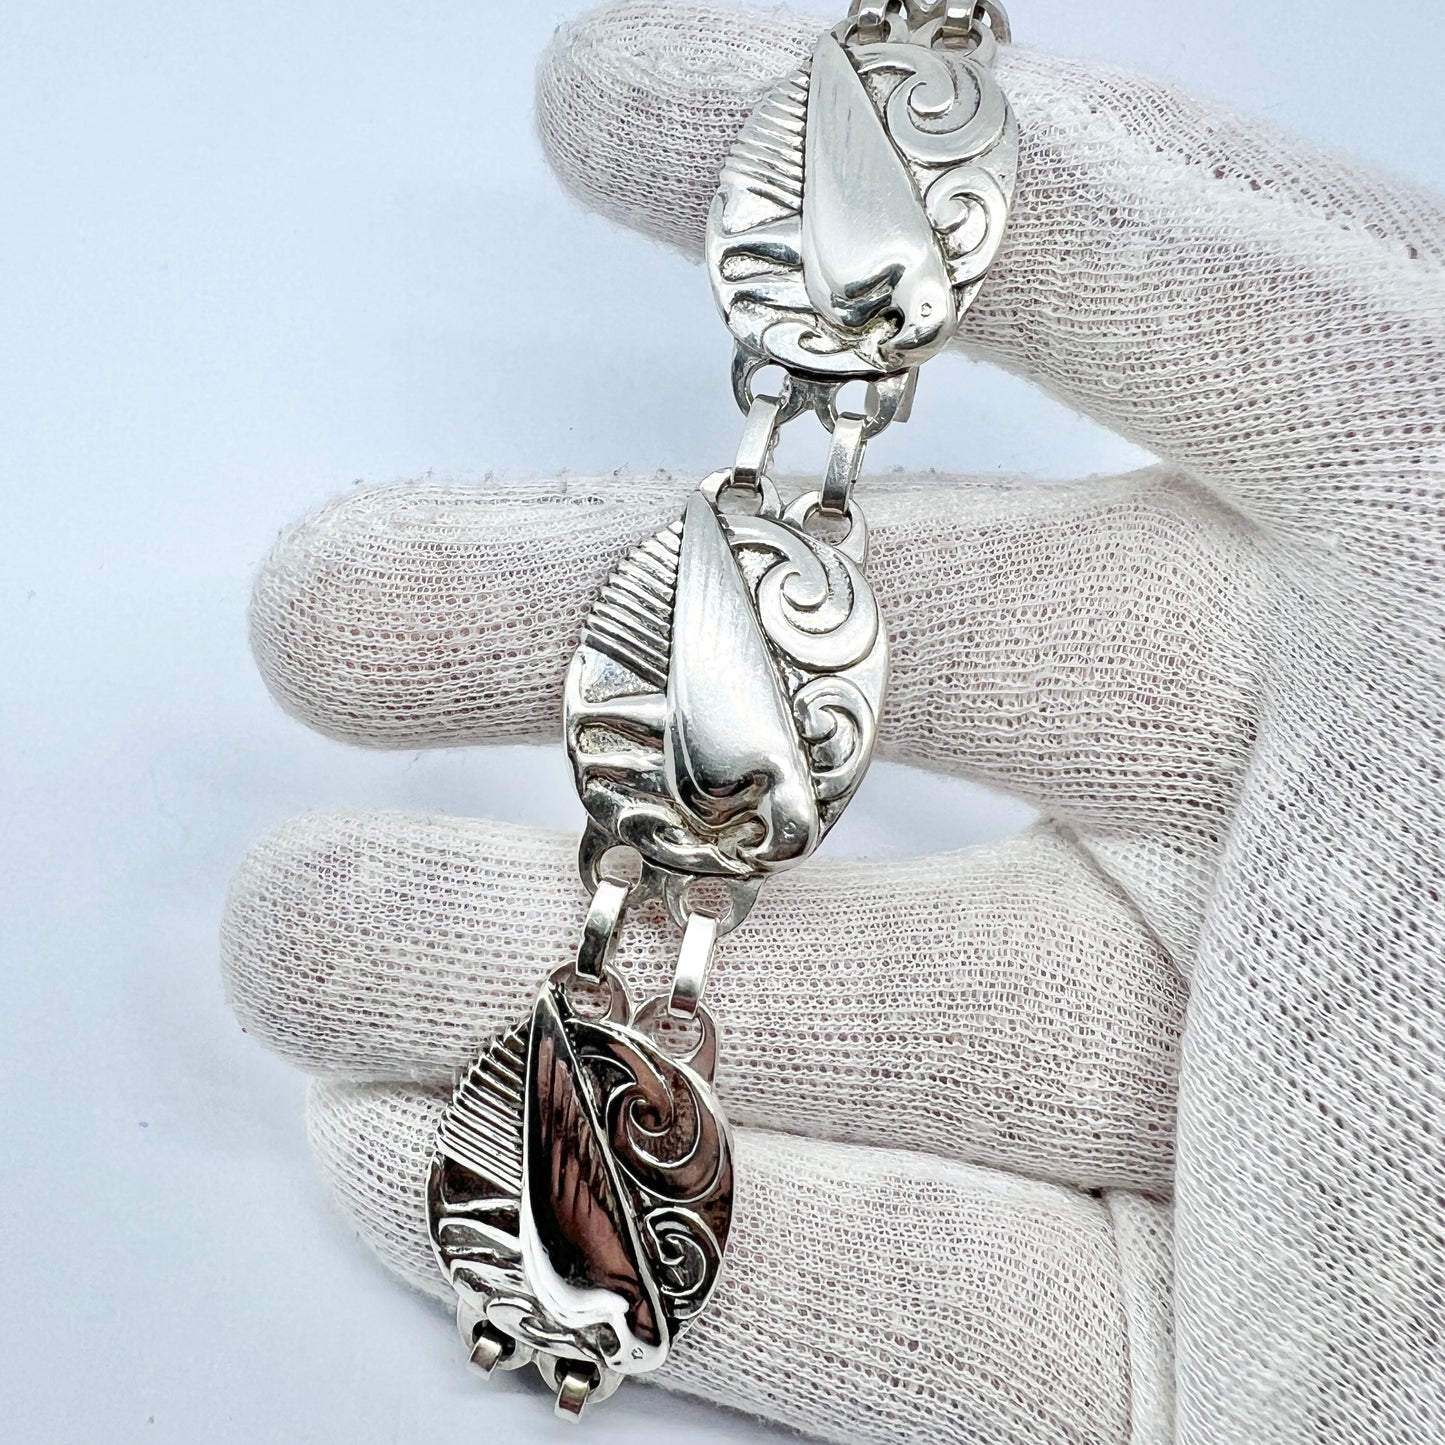 Genuine Norseland (CORO), USA 1940s. Sterling Silver Bird Bracelet.